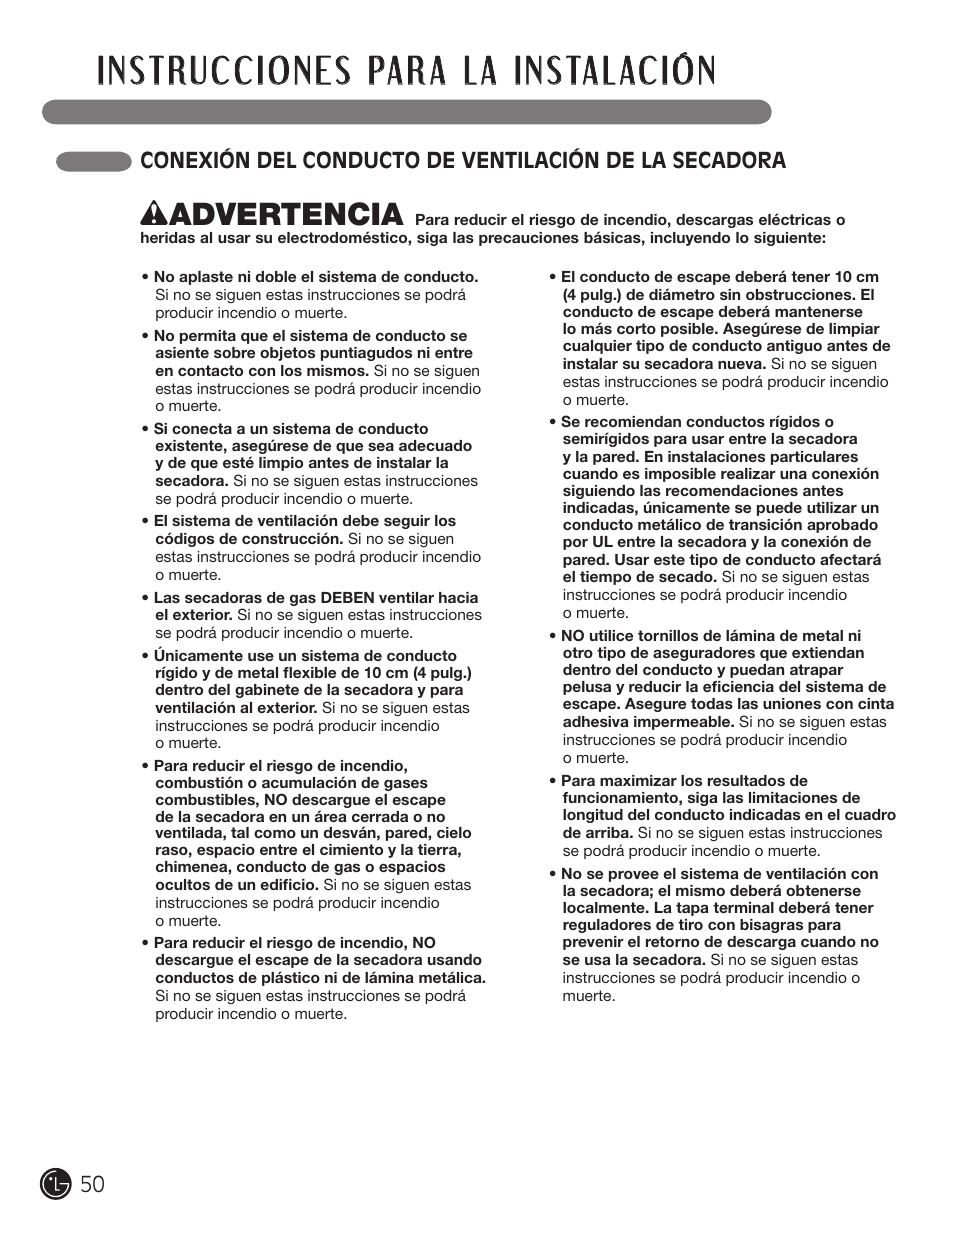 W advertencia | LG D5966W User Manual | Page 50 / 80